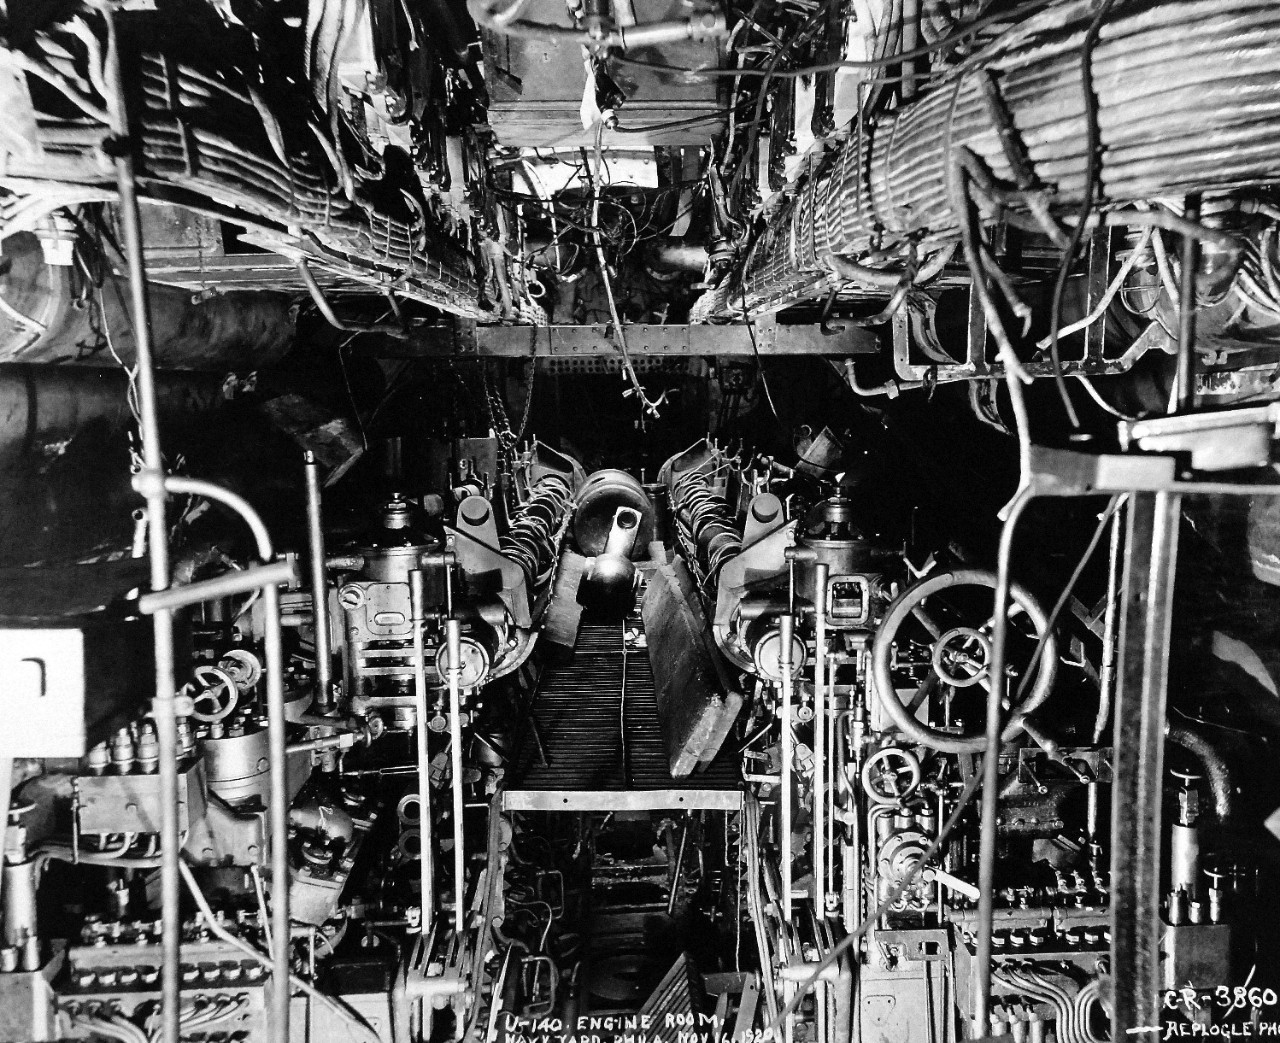 <p>19-N-3860: German submarine, U-140, engine room, while at Philadelphia Navy Yard, Philadelphia, Pennsylvania, November 16, 1920.&nbsp;</p>
